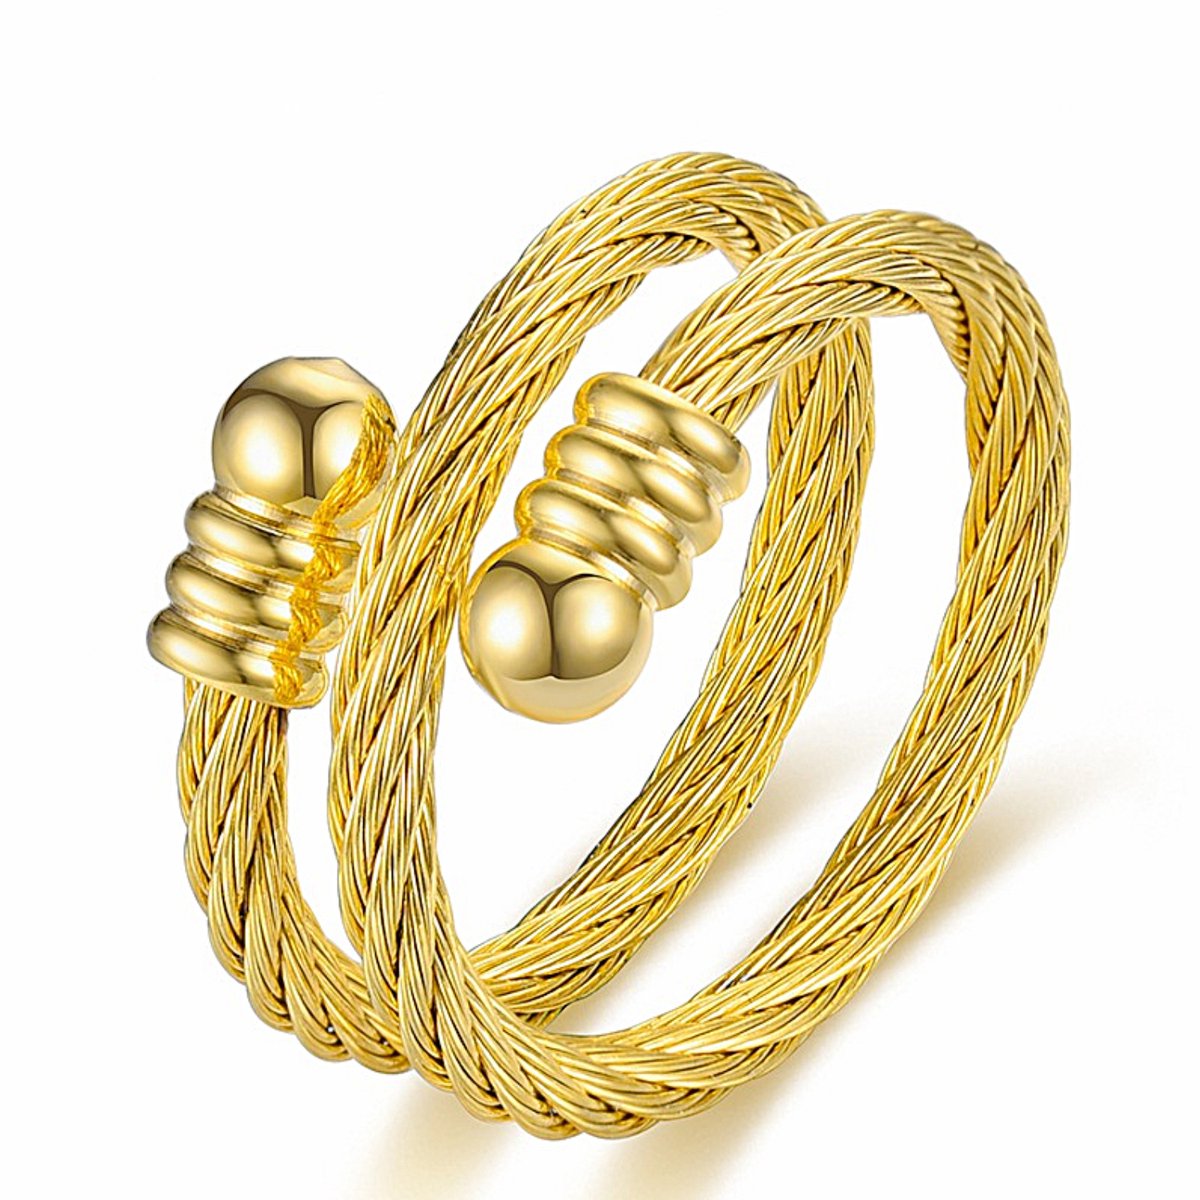 Kungu One size Luxe Chain Ring - Heren - Ringen - Mannen - Vrouwen - Cadeautjes - Titanium staal - stainless steel